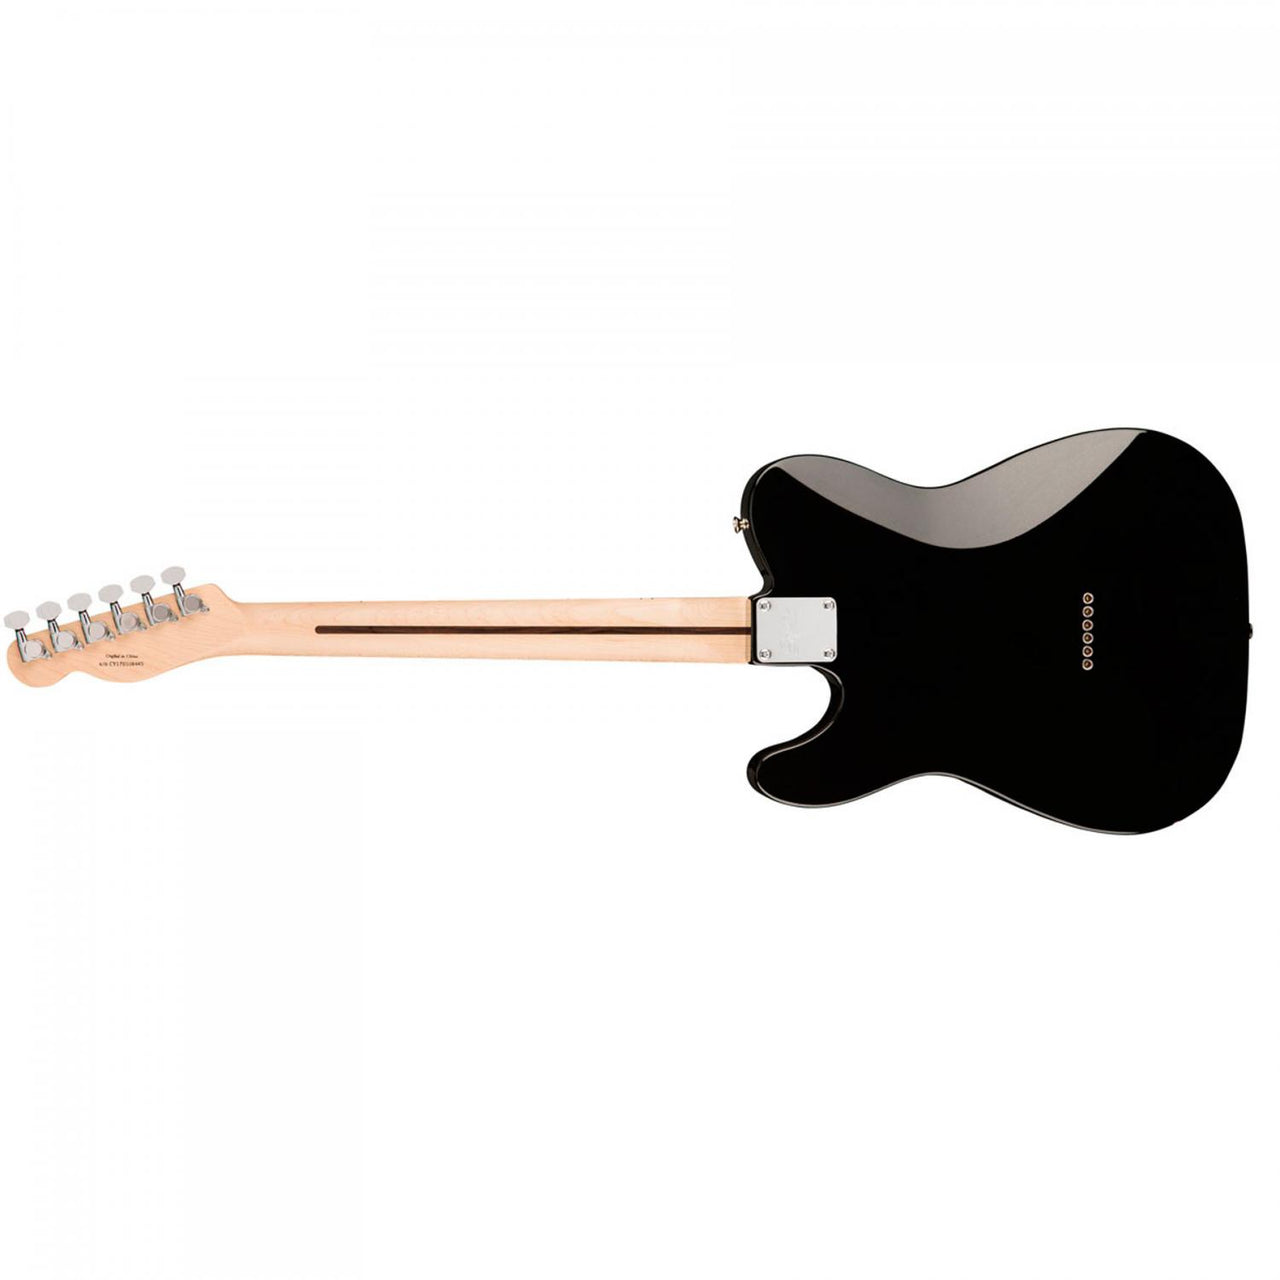 Guitarra Electrica Fender Sq Cont Tele Hh Mn Blk Met, 0371222565